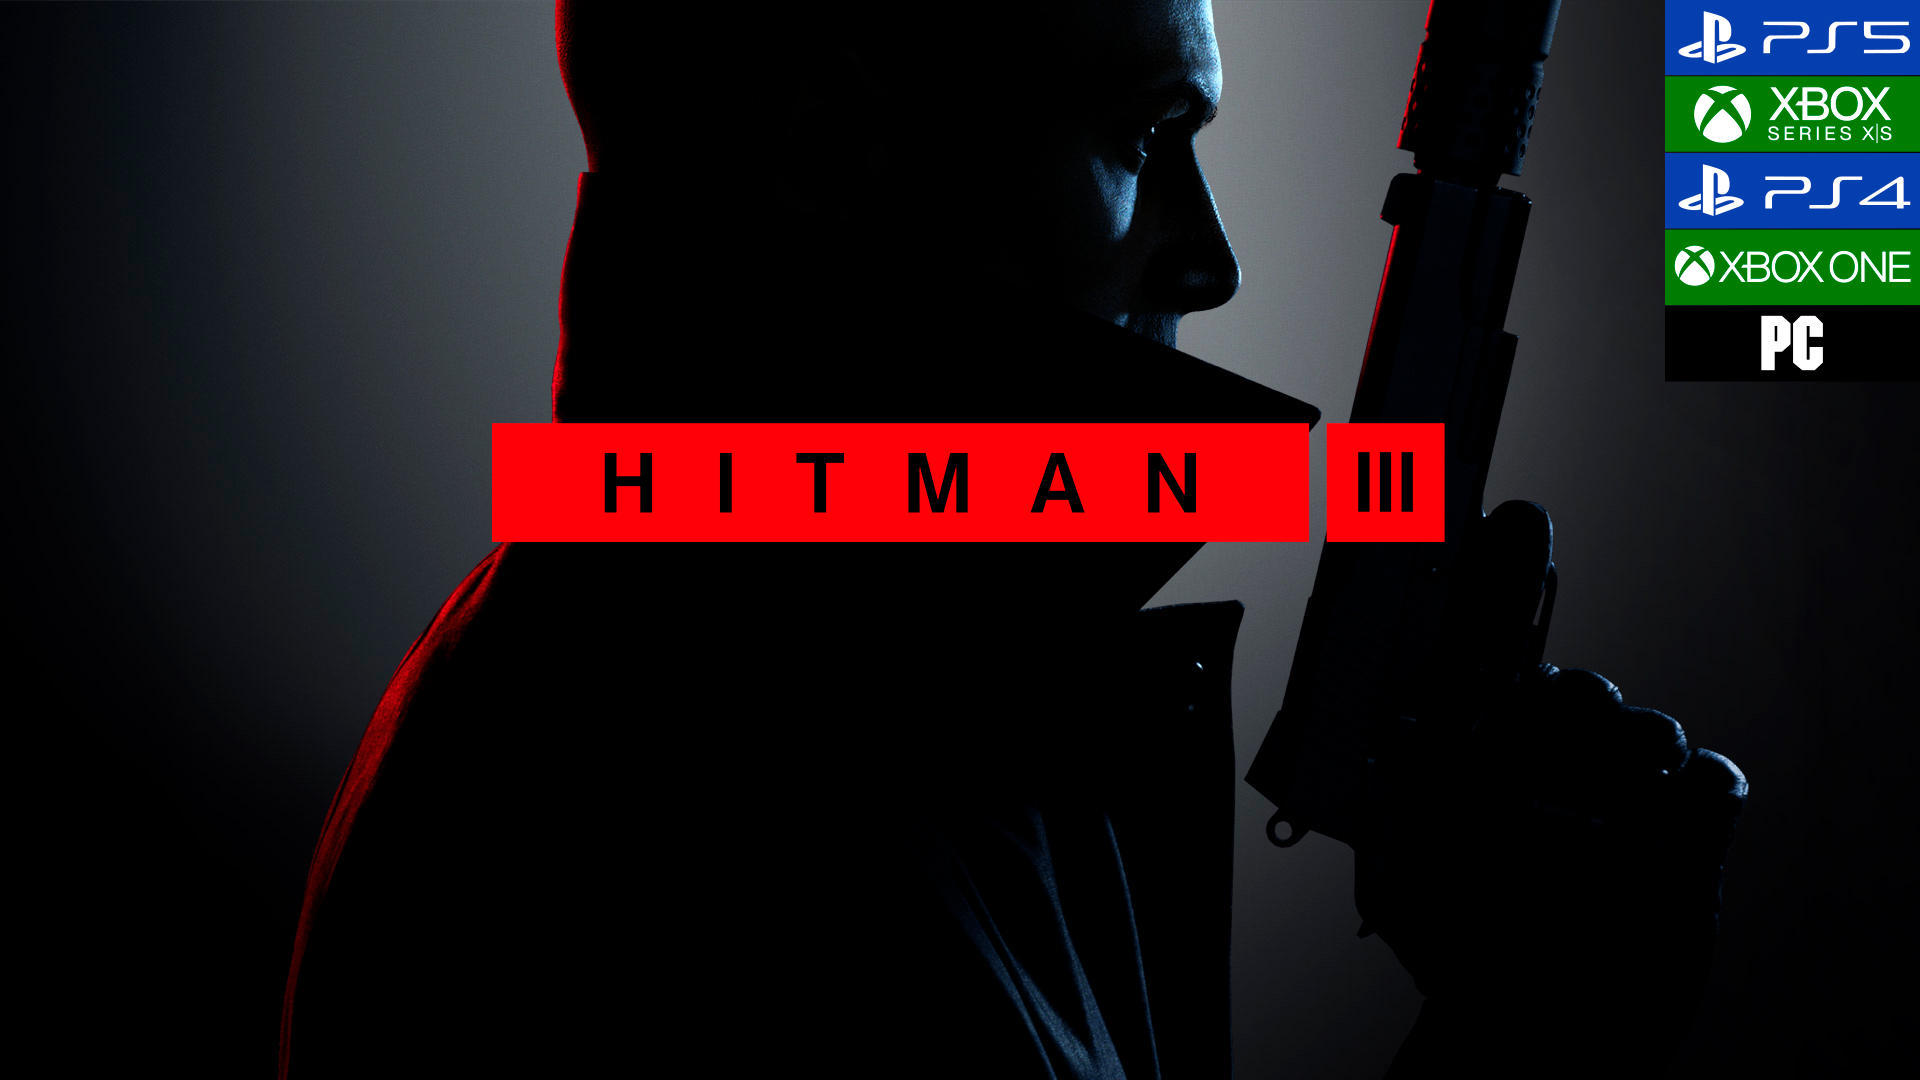 Análisis Hitman 3, superdepredador